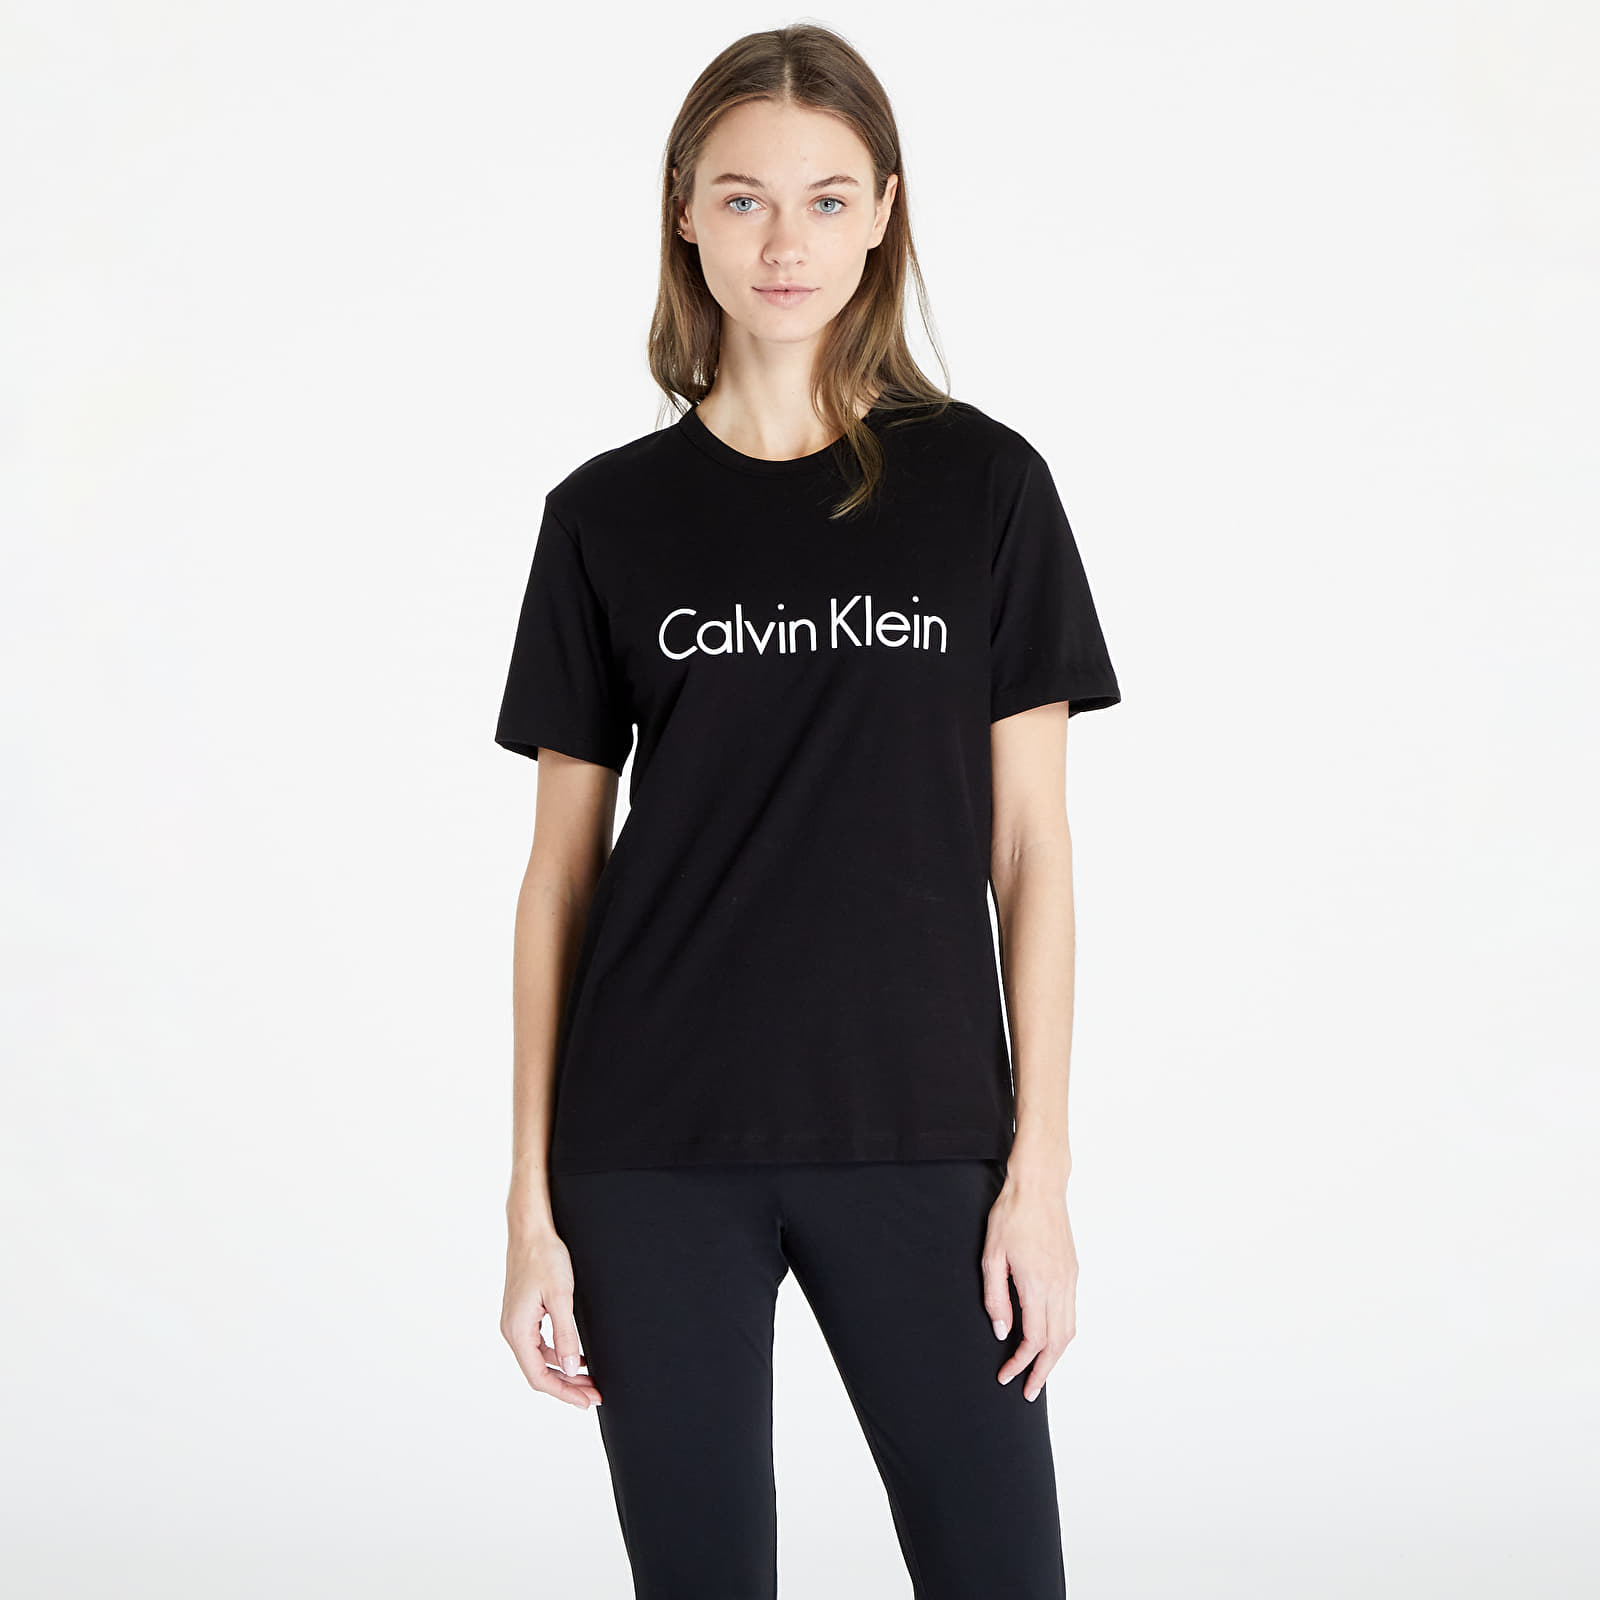 Trička Calvin Klein Tee Black